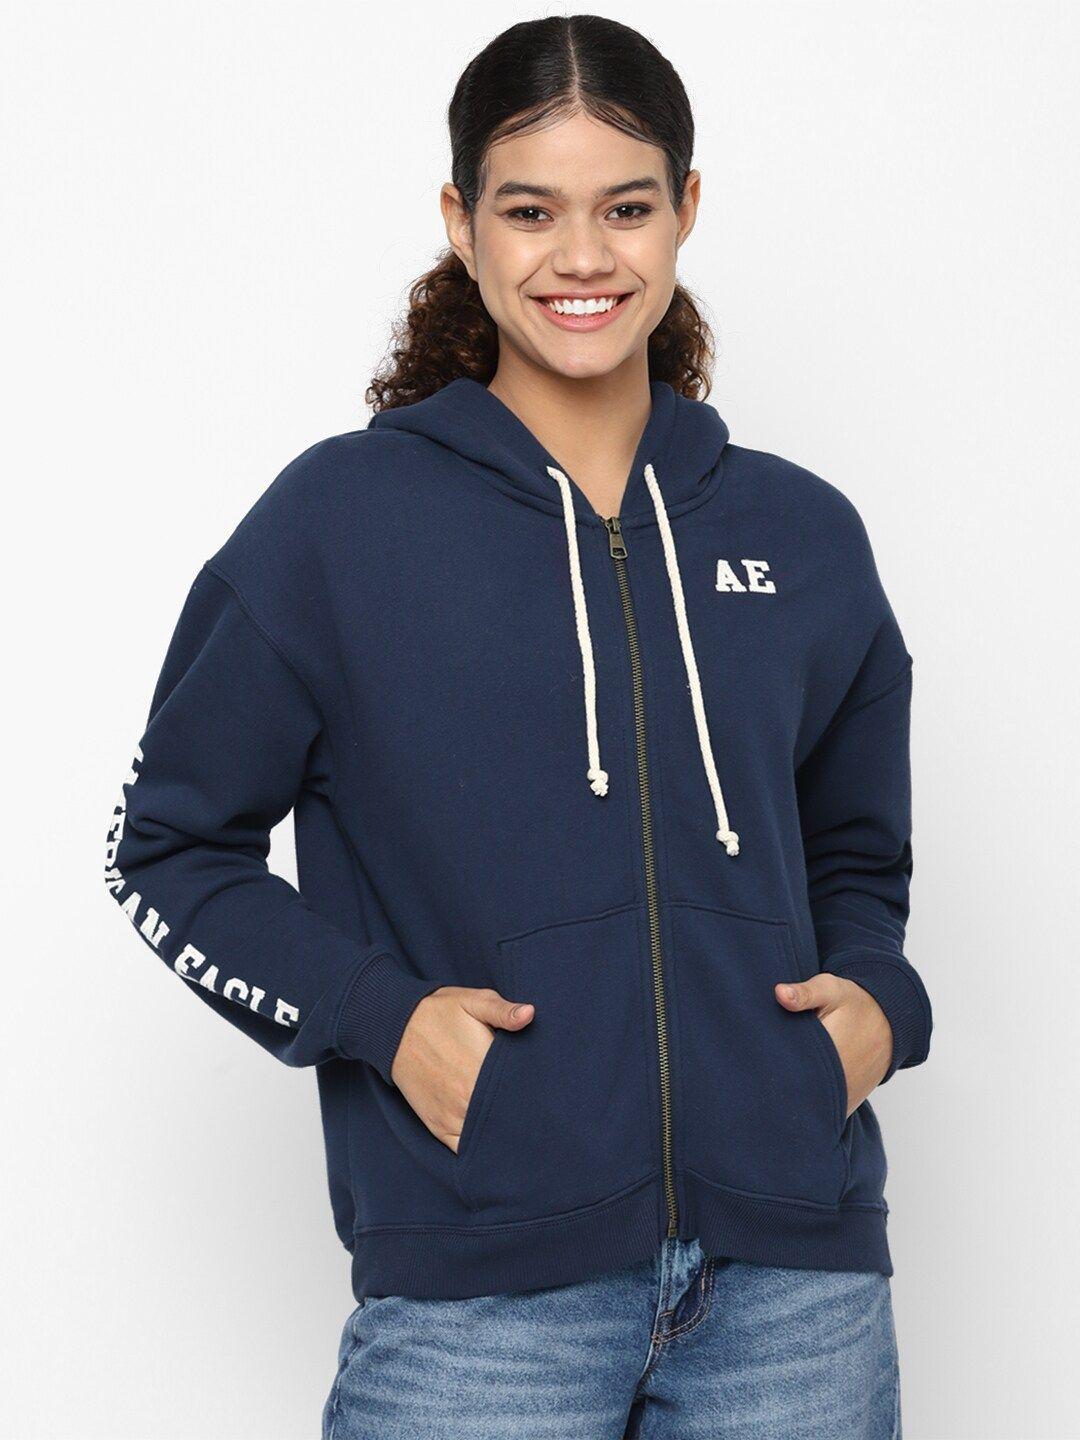 american-eagle-outfitters-women-navy-blue-printed-hooded-sweatshirt